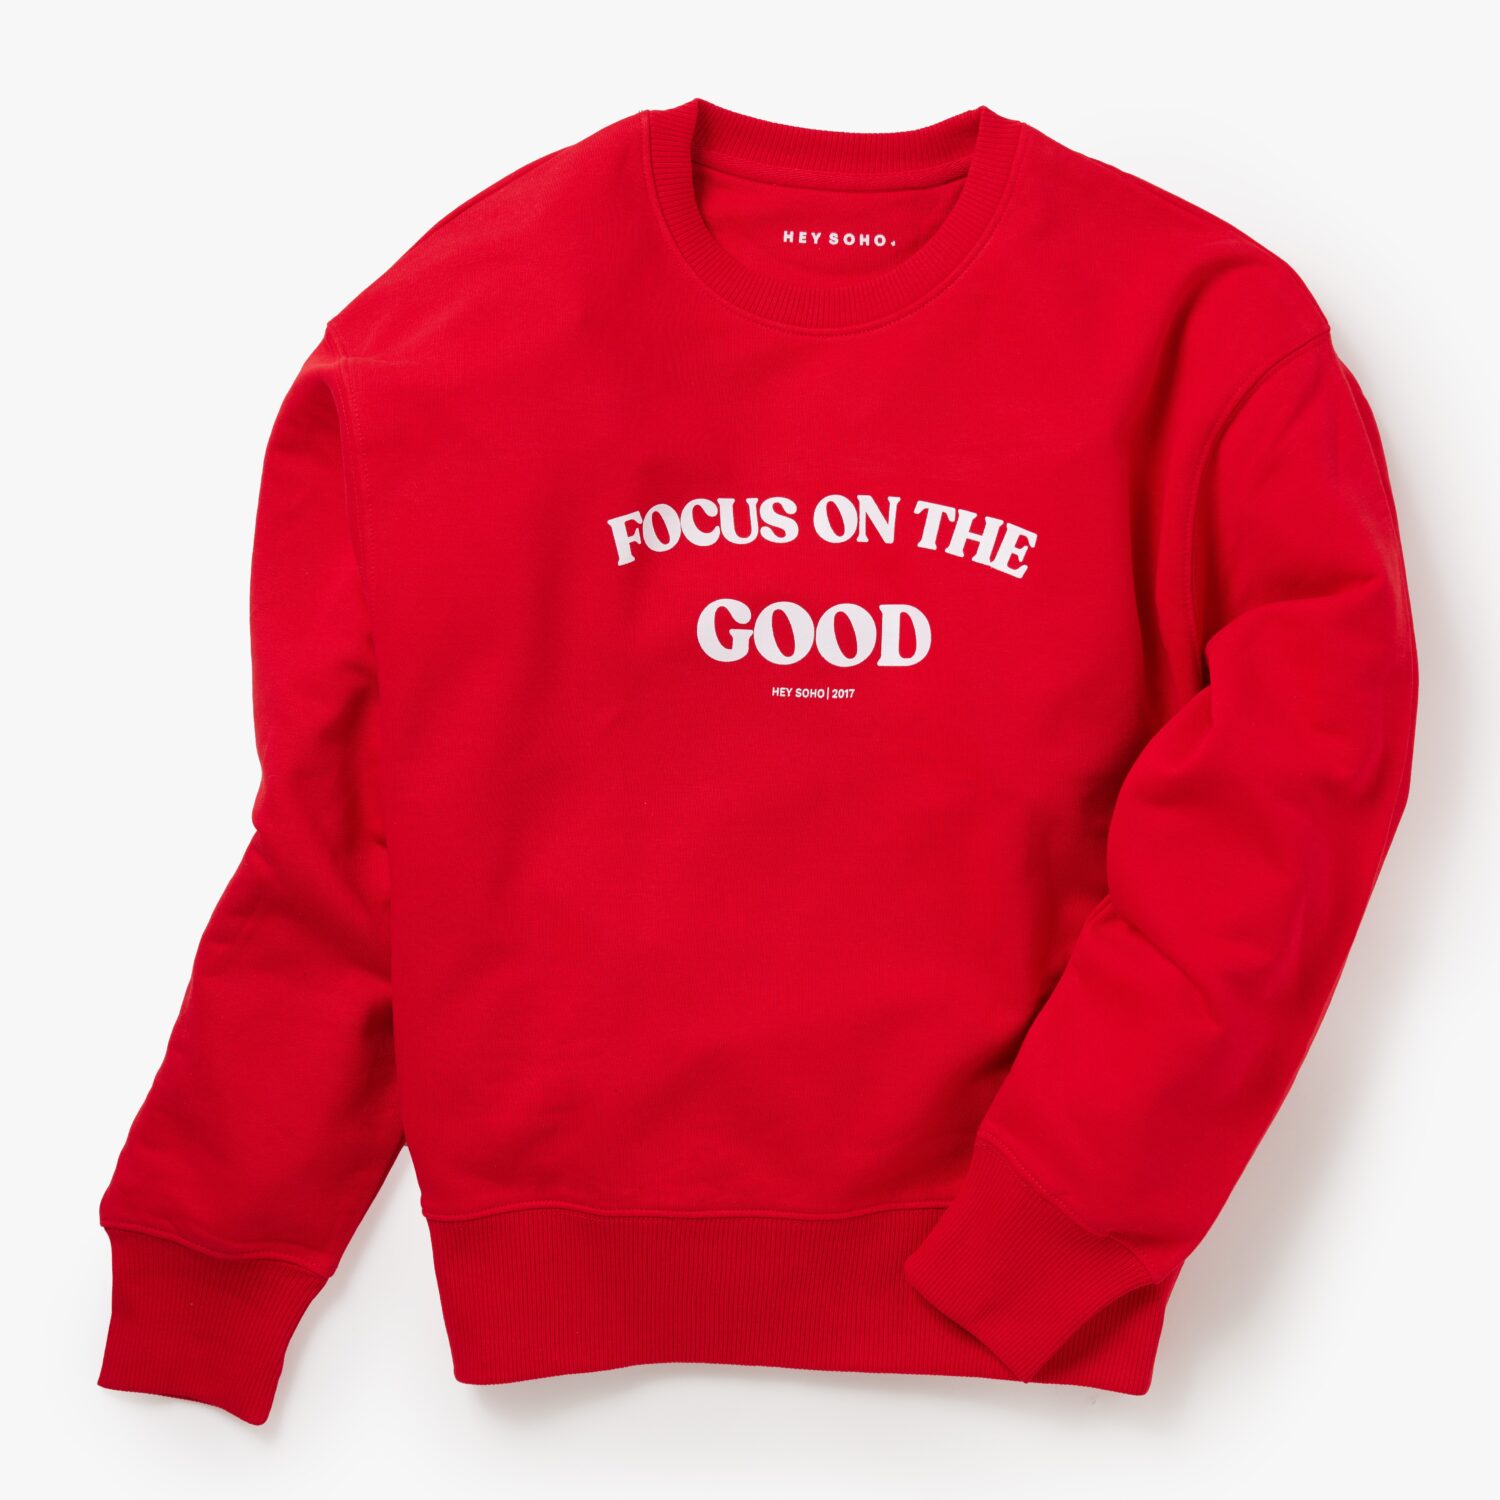 hey soho Sweater Focus on the good